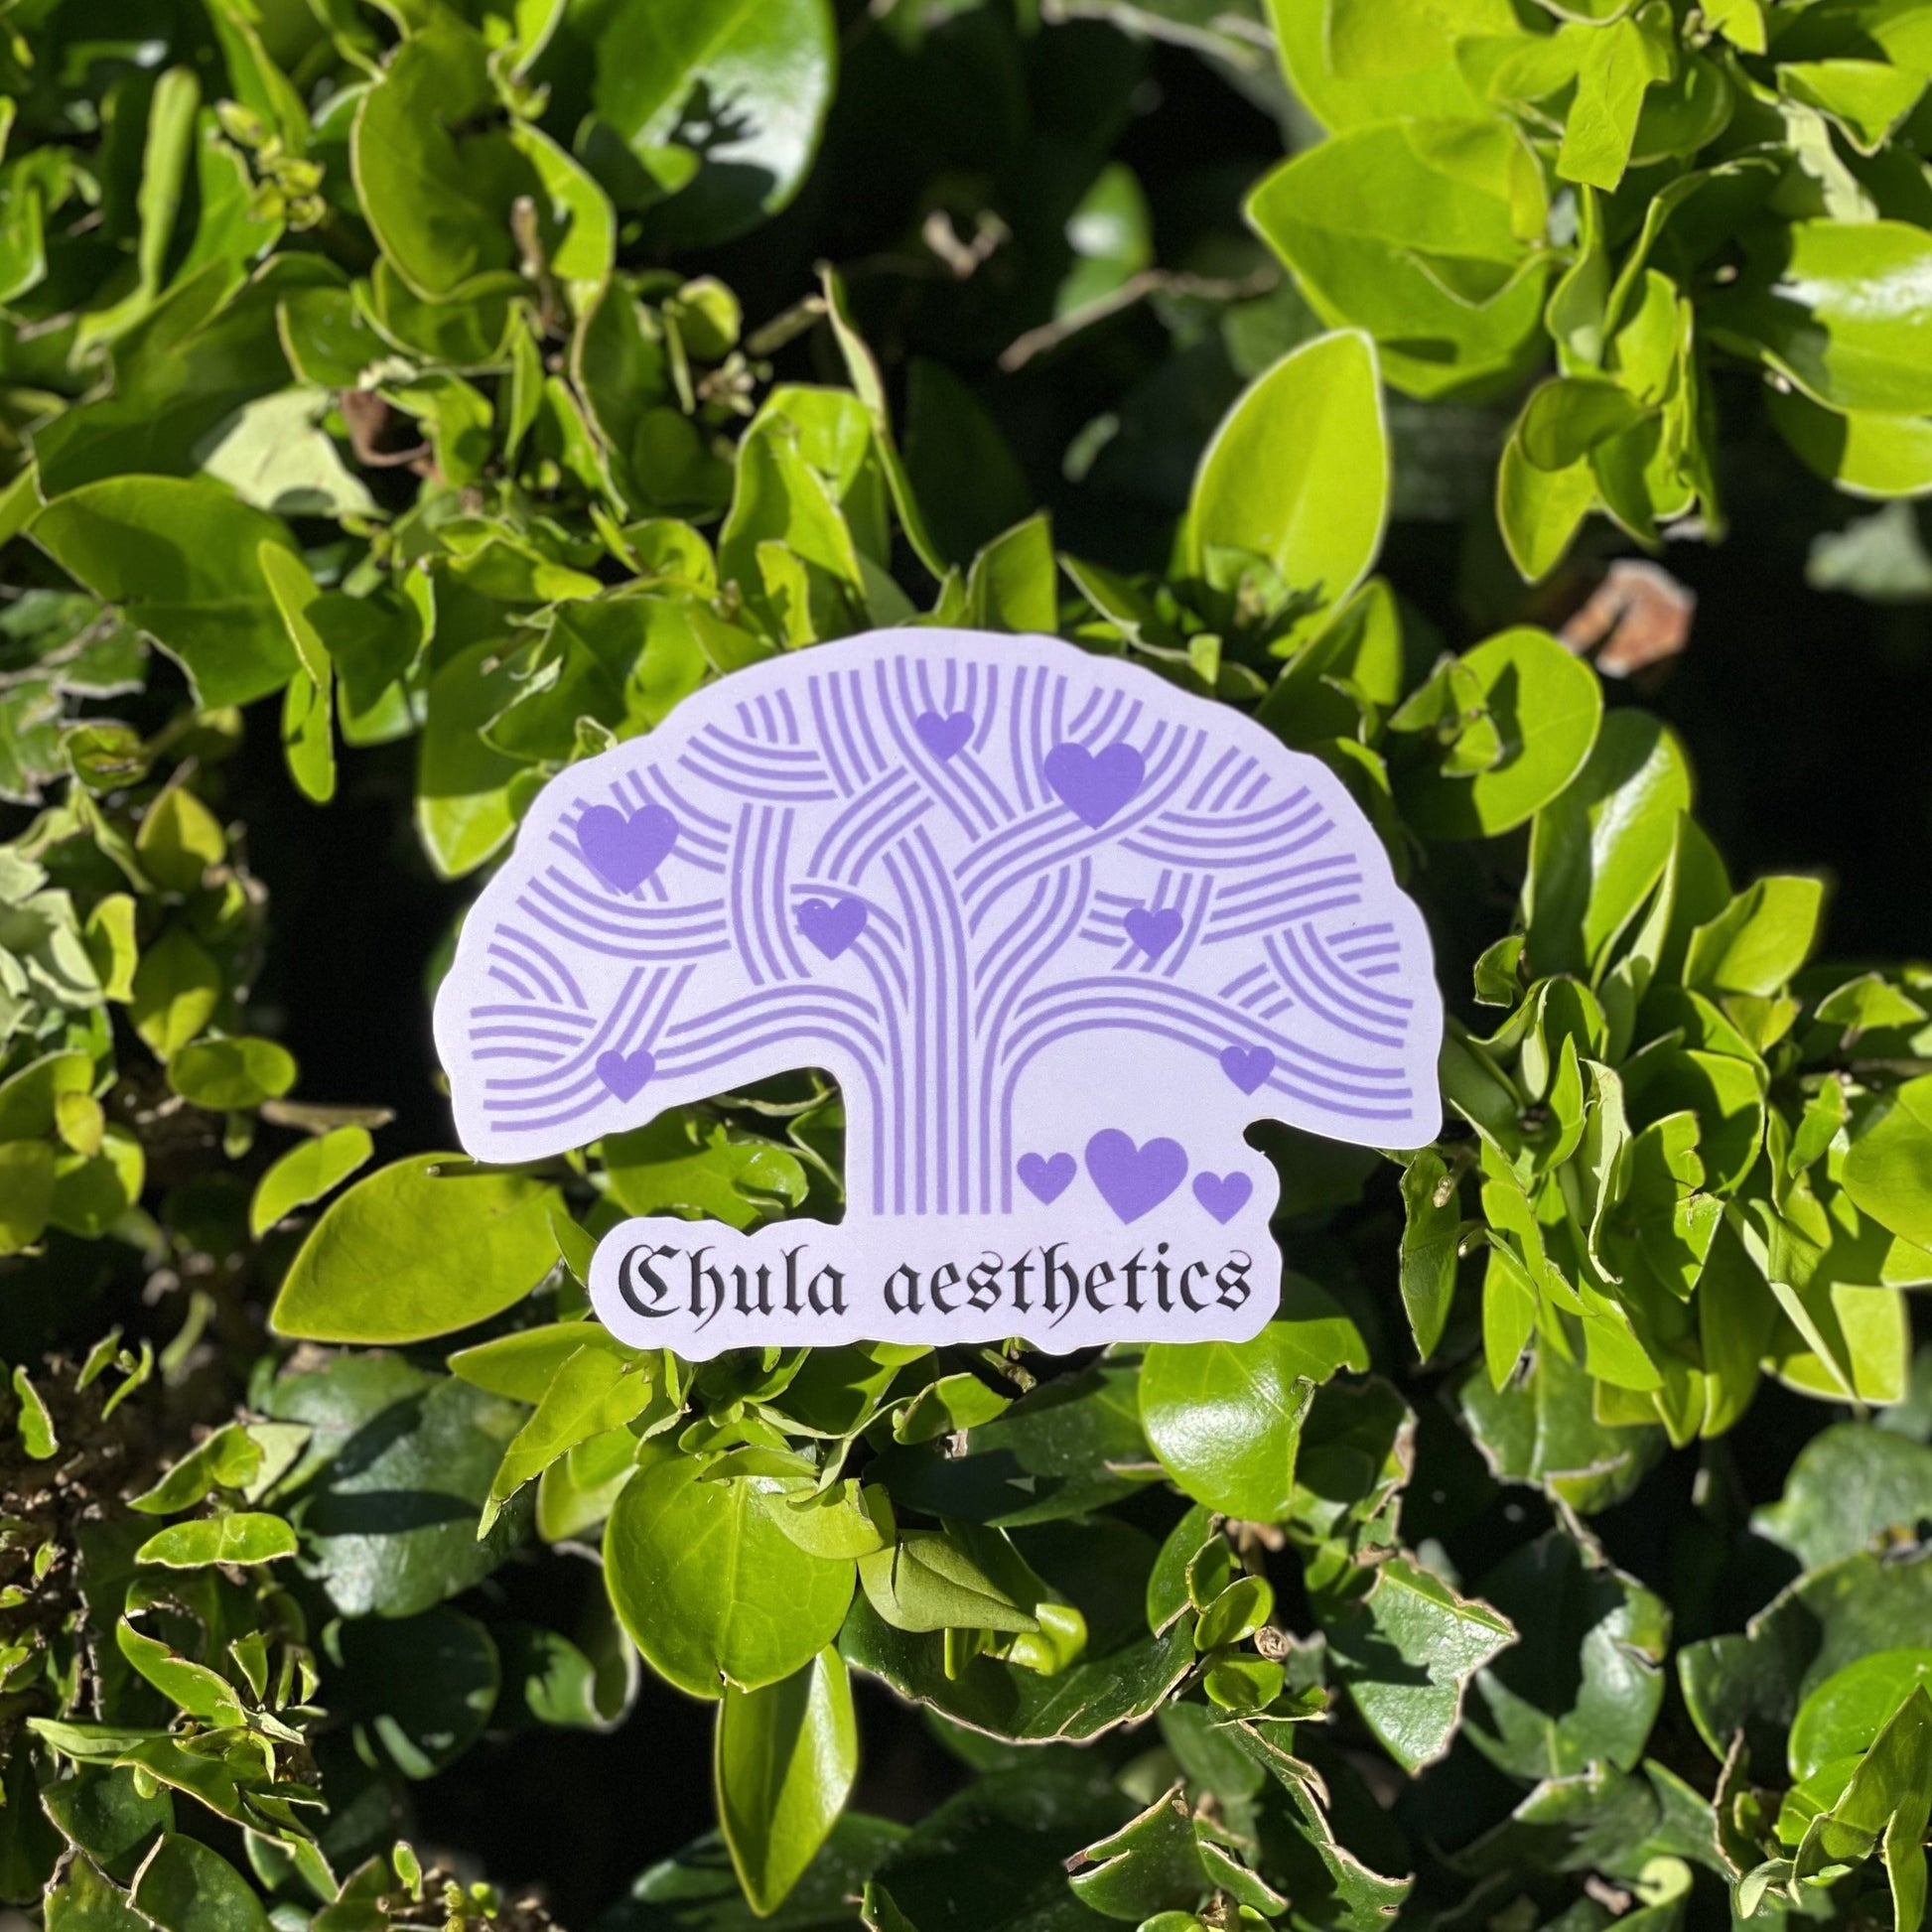 Purple Oakland tree with purple hearts and Chula aesthetics name/logo displayed on green bush.